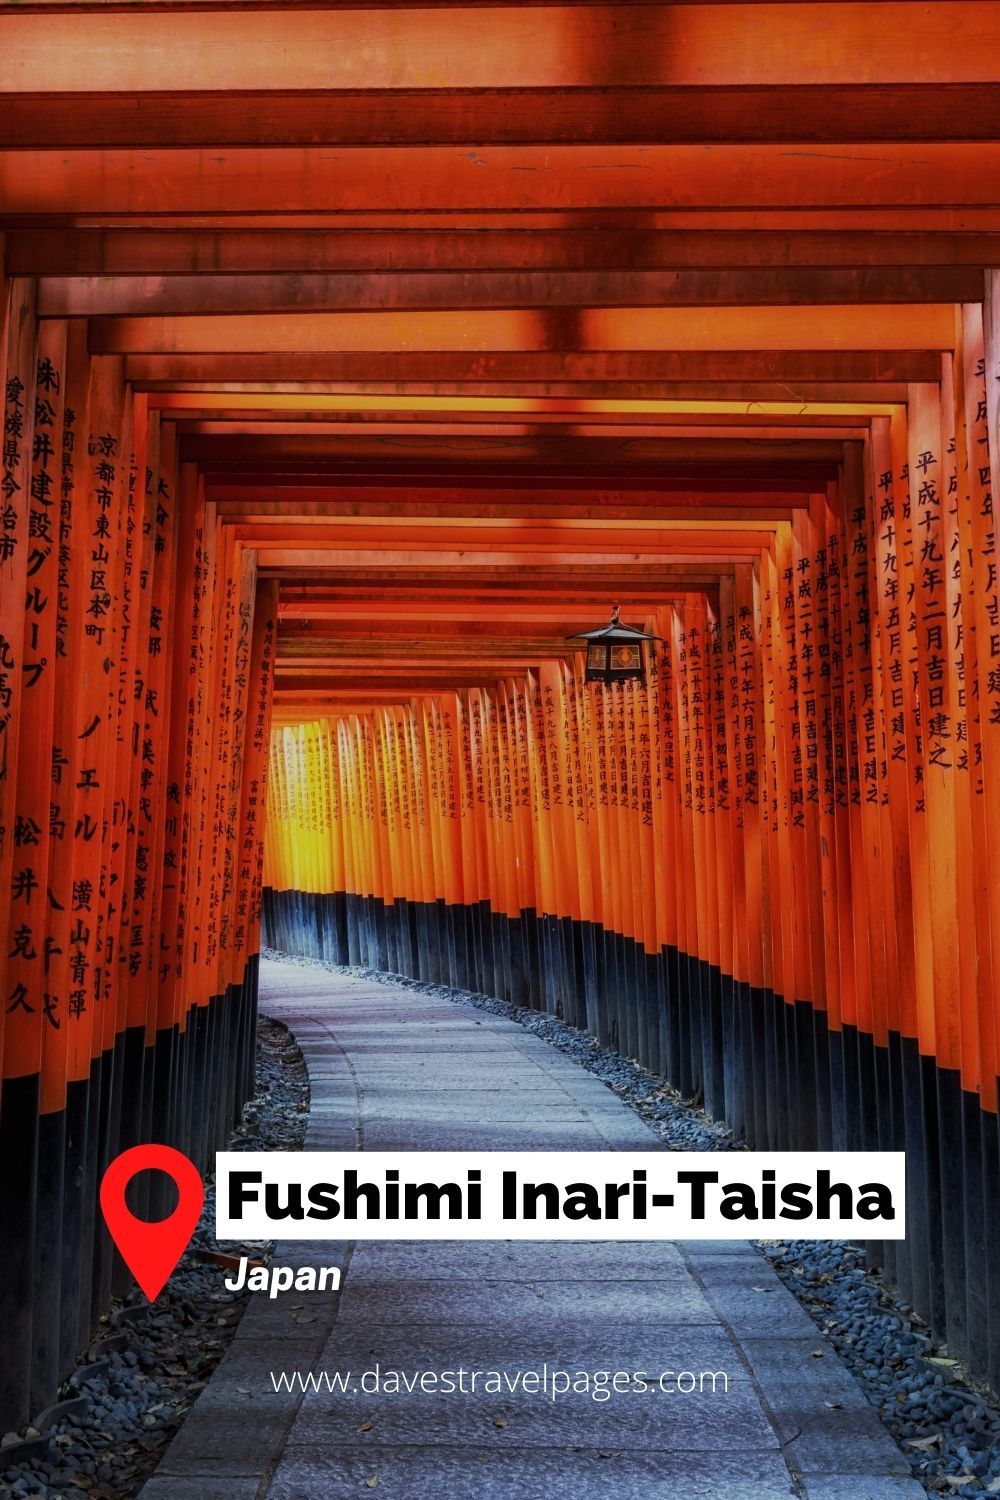 Landmarks of Asia: Fushimi Inari-Taisha